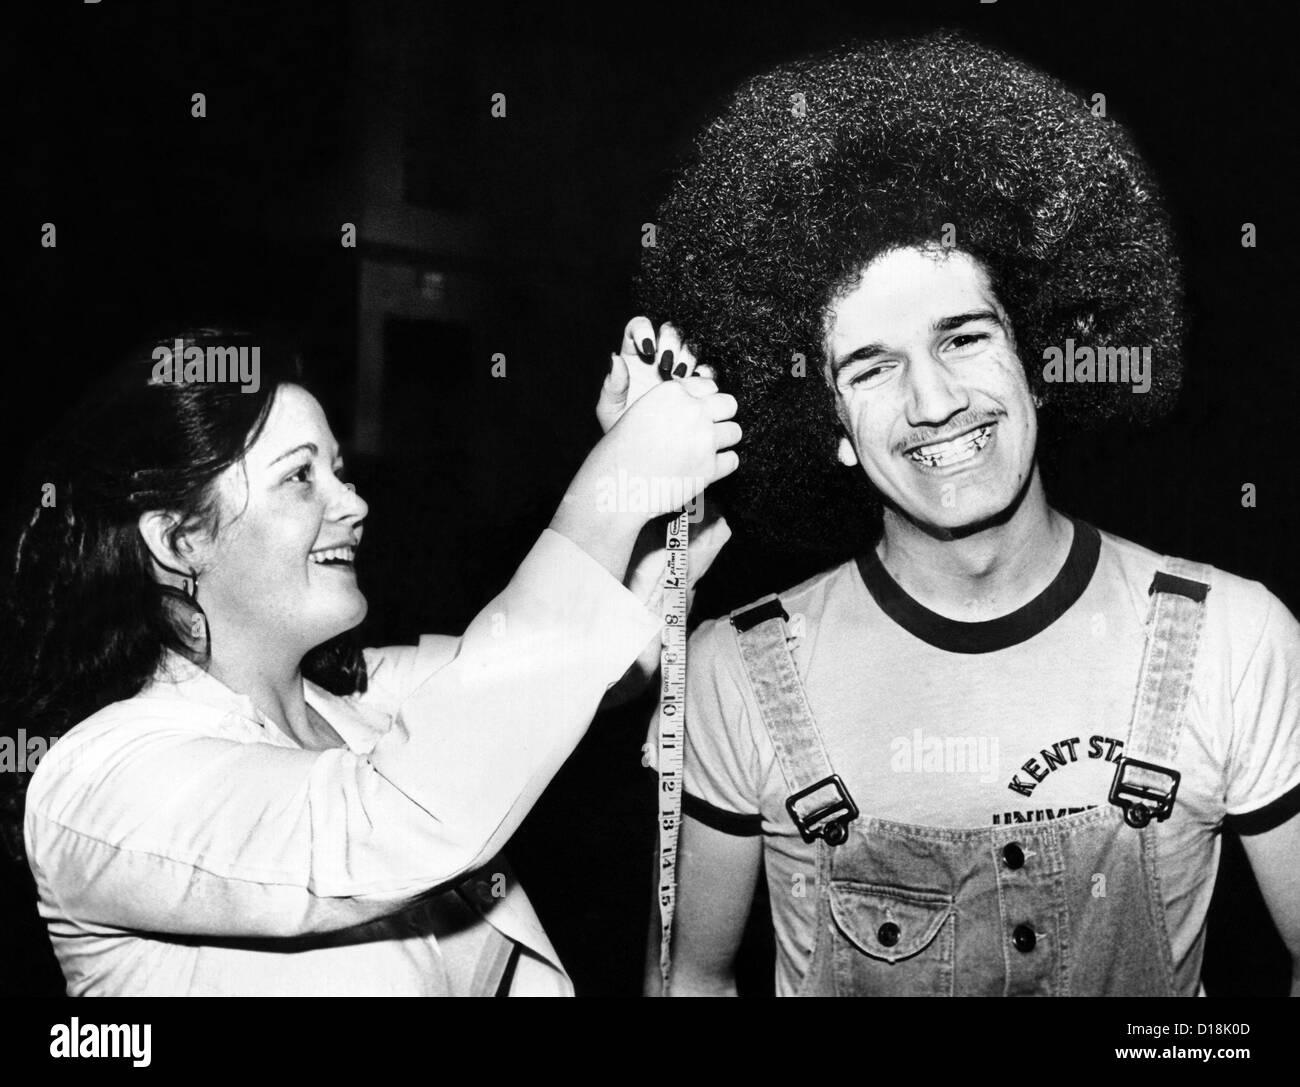 Trish Blankenburg measures the hair of David Messina, Bat Village, High School Senior. Cleveland, Ohio, Feb. 1980. Stock Photo